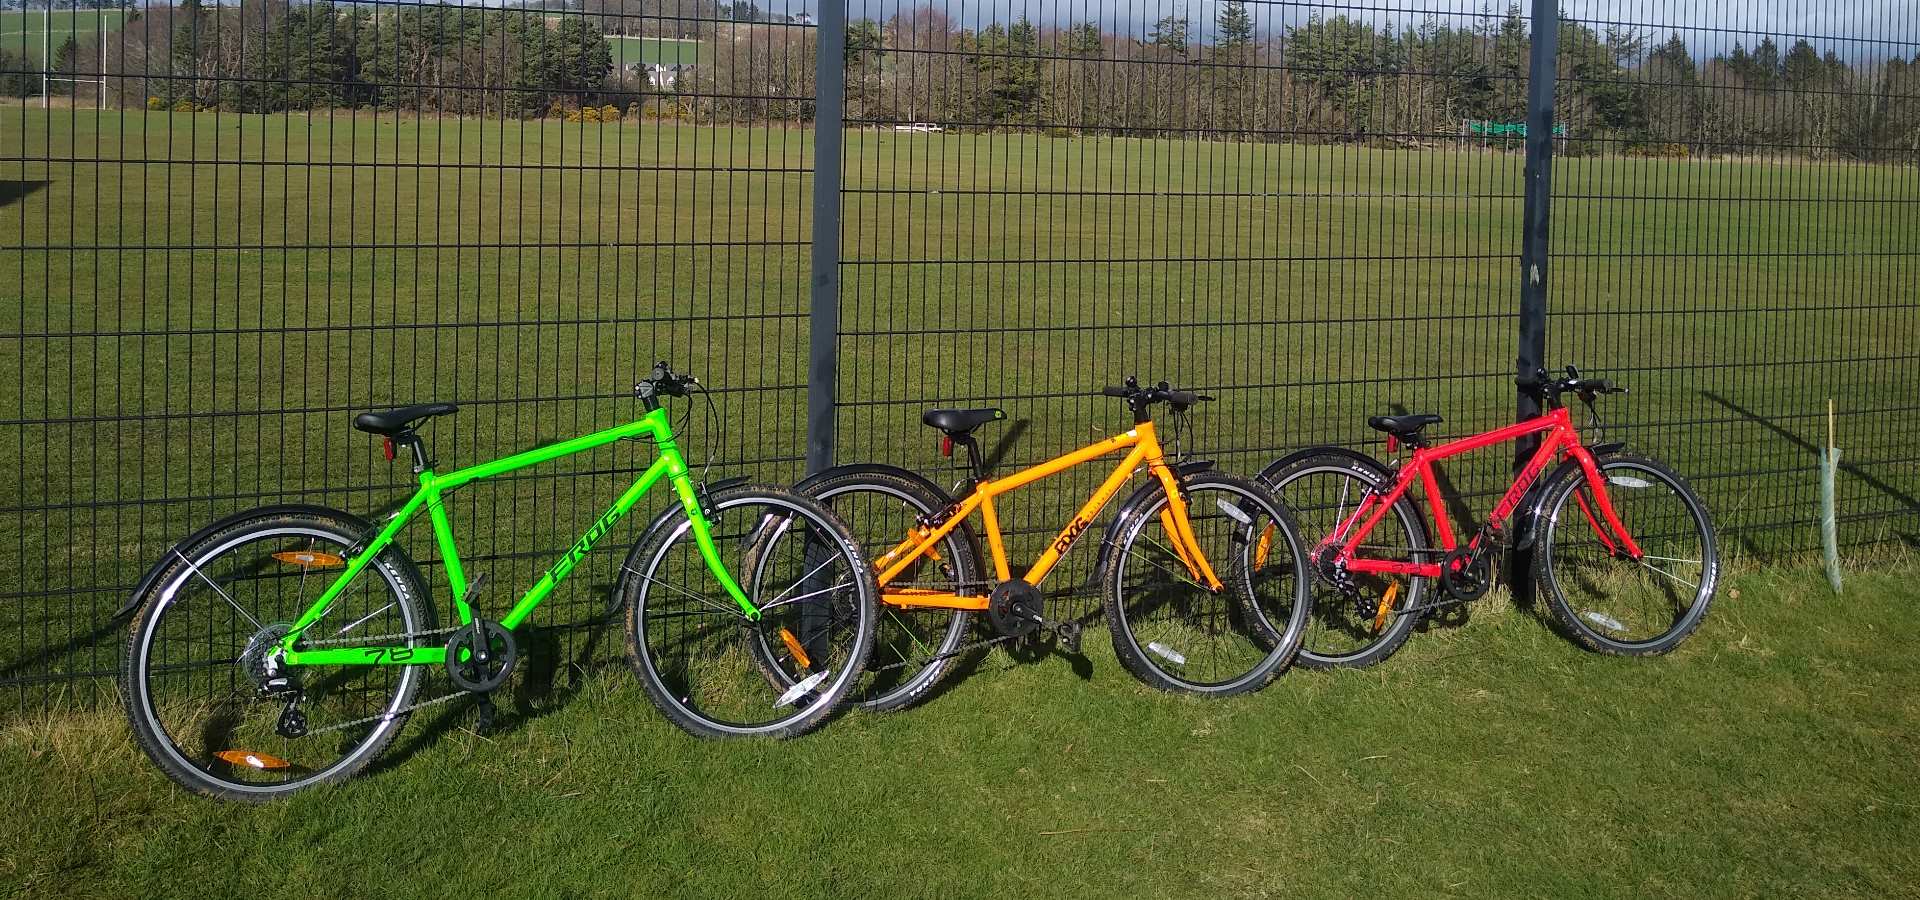 A row of colourful bikes